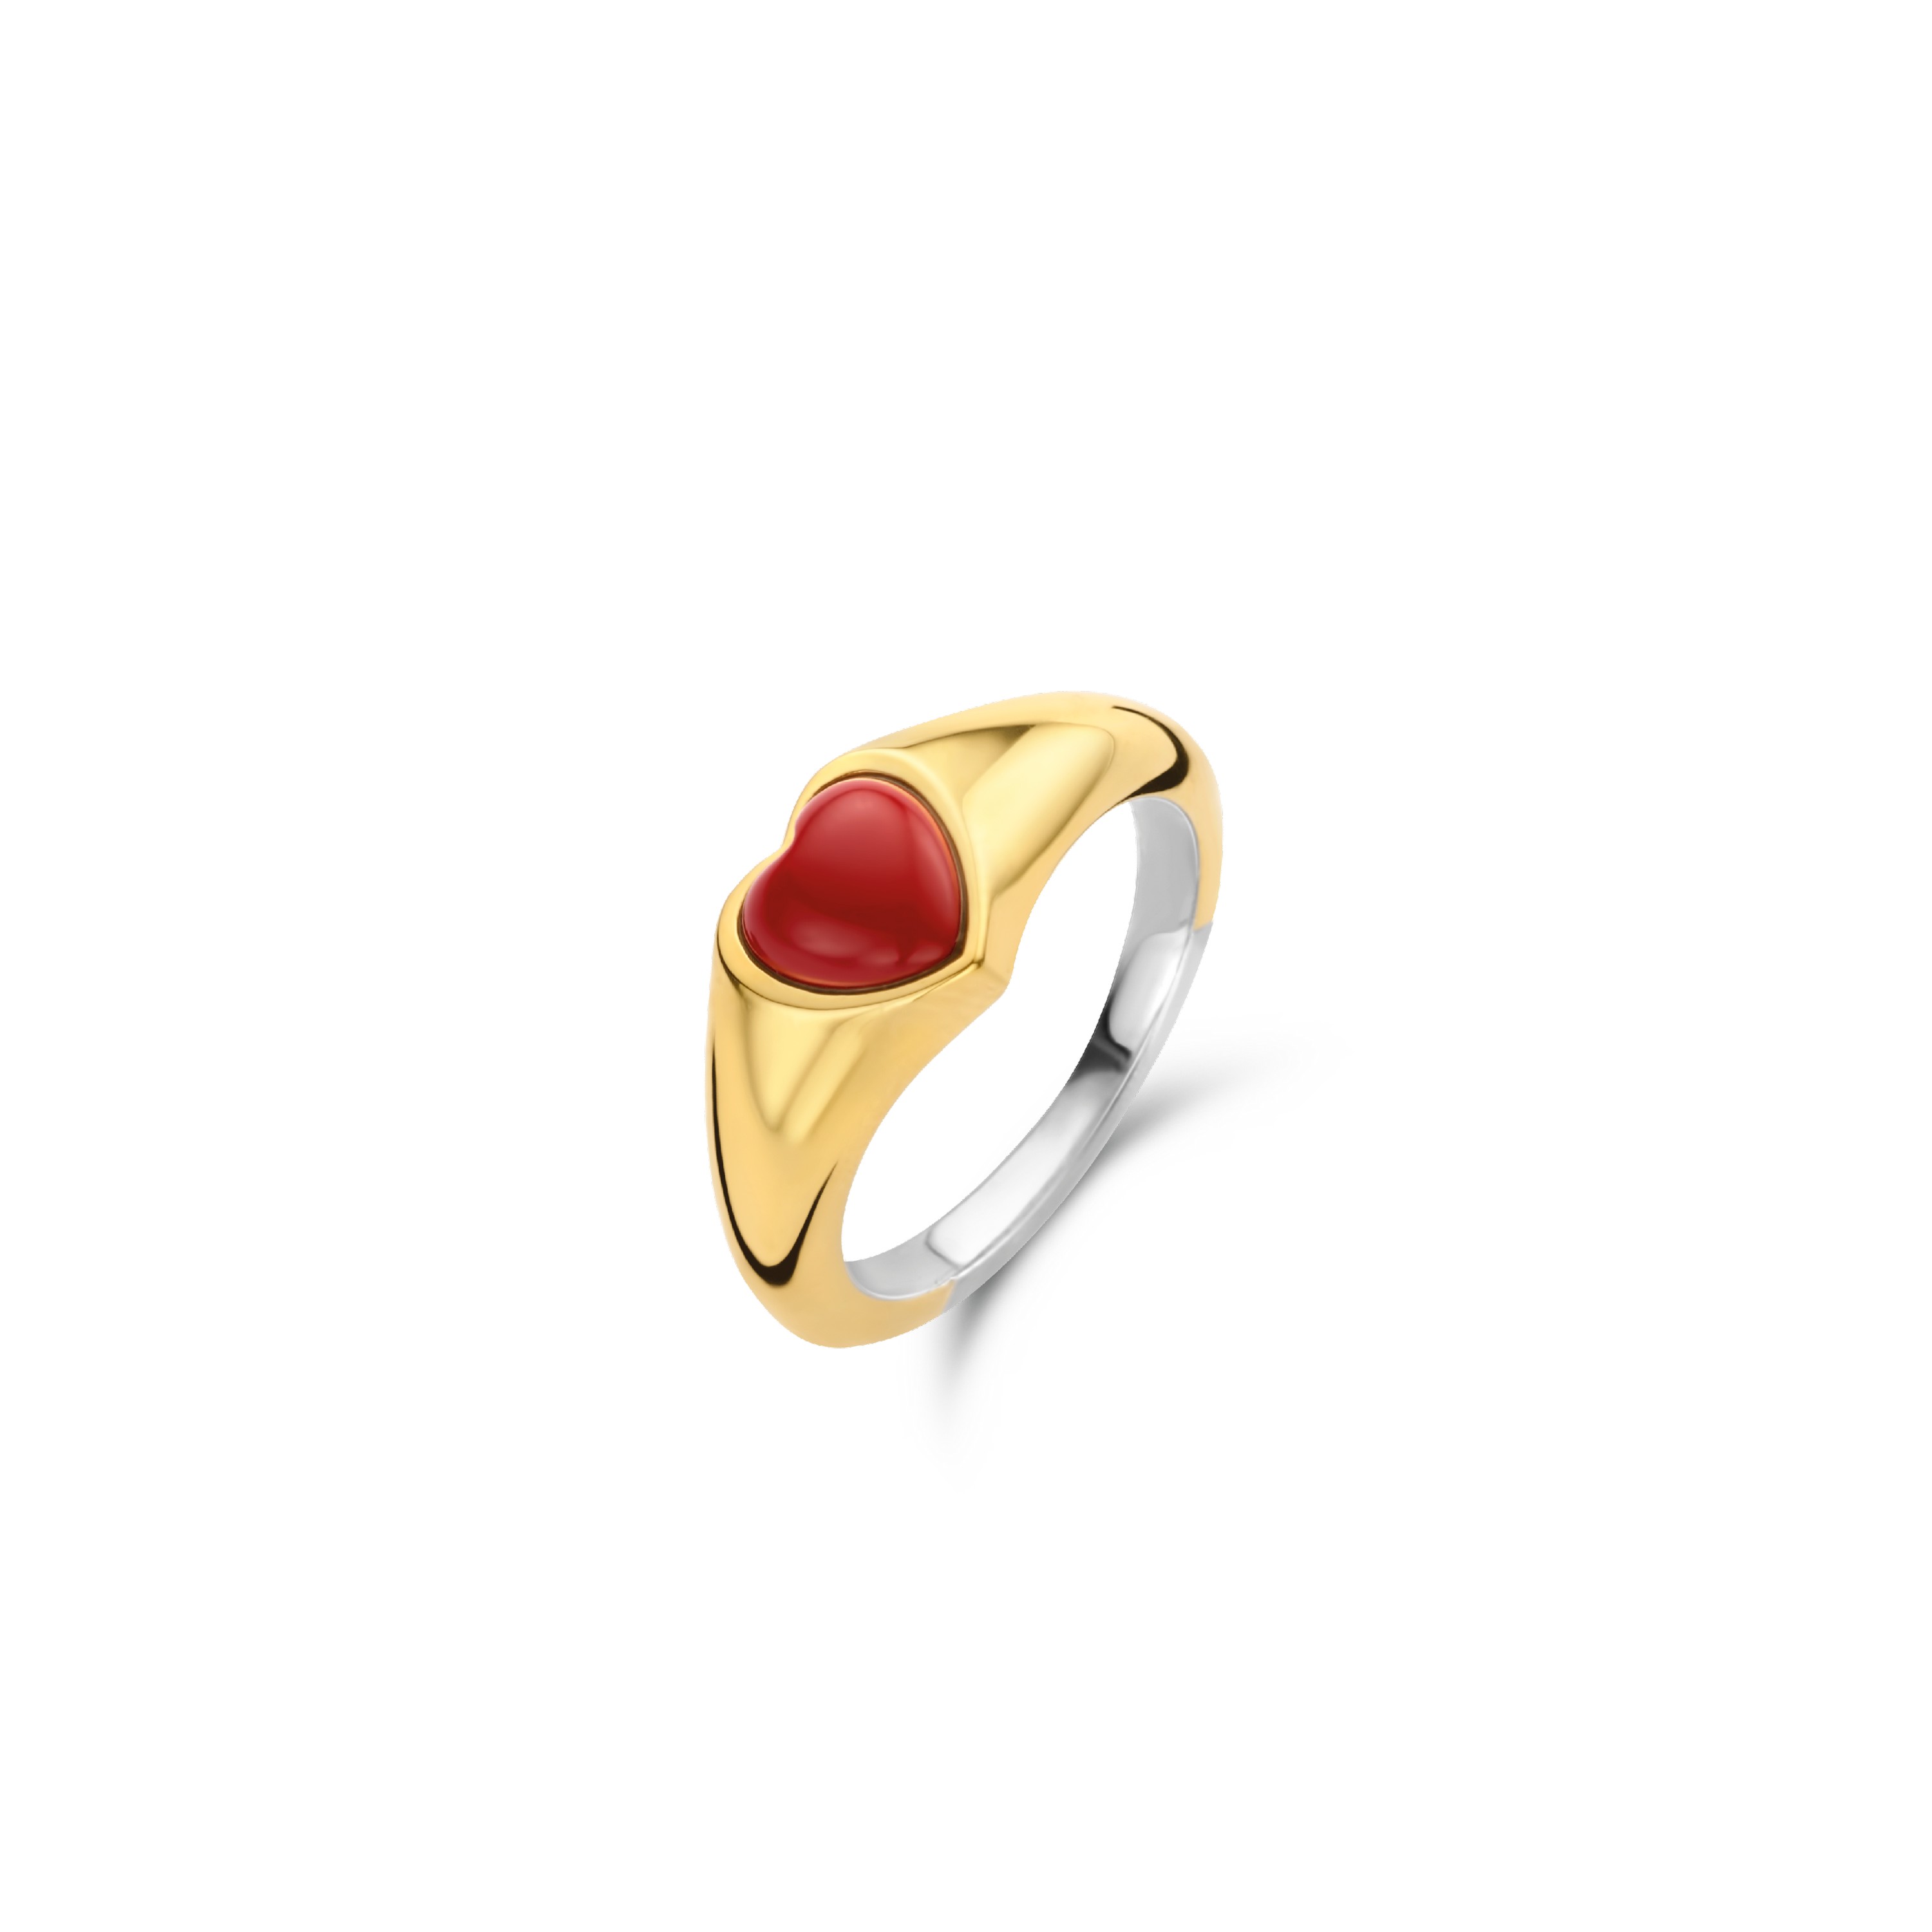 TI SENTO - Milano Ring 12220CR Gala Jewelers Inc. White Oak, PA